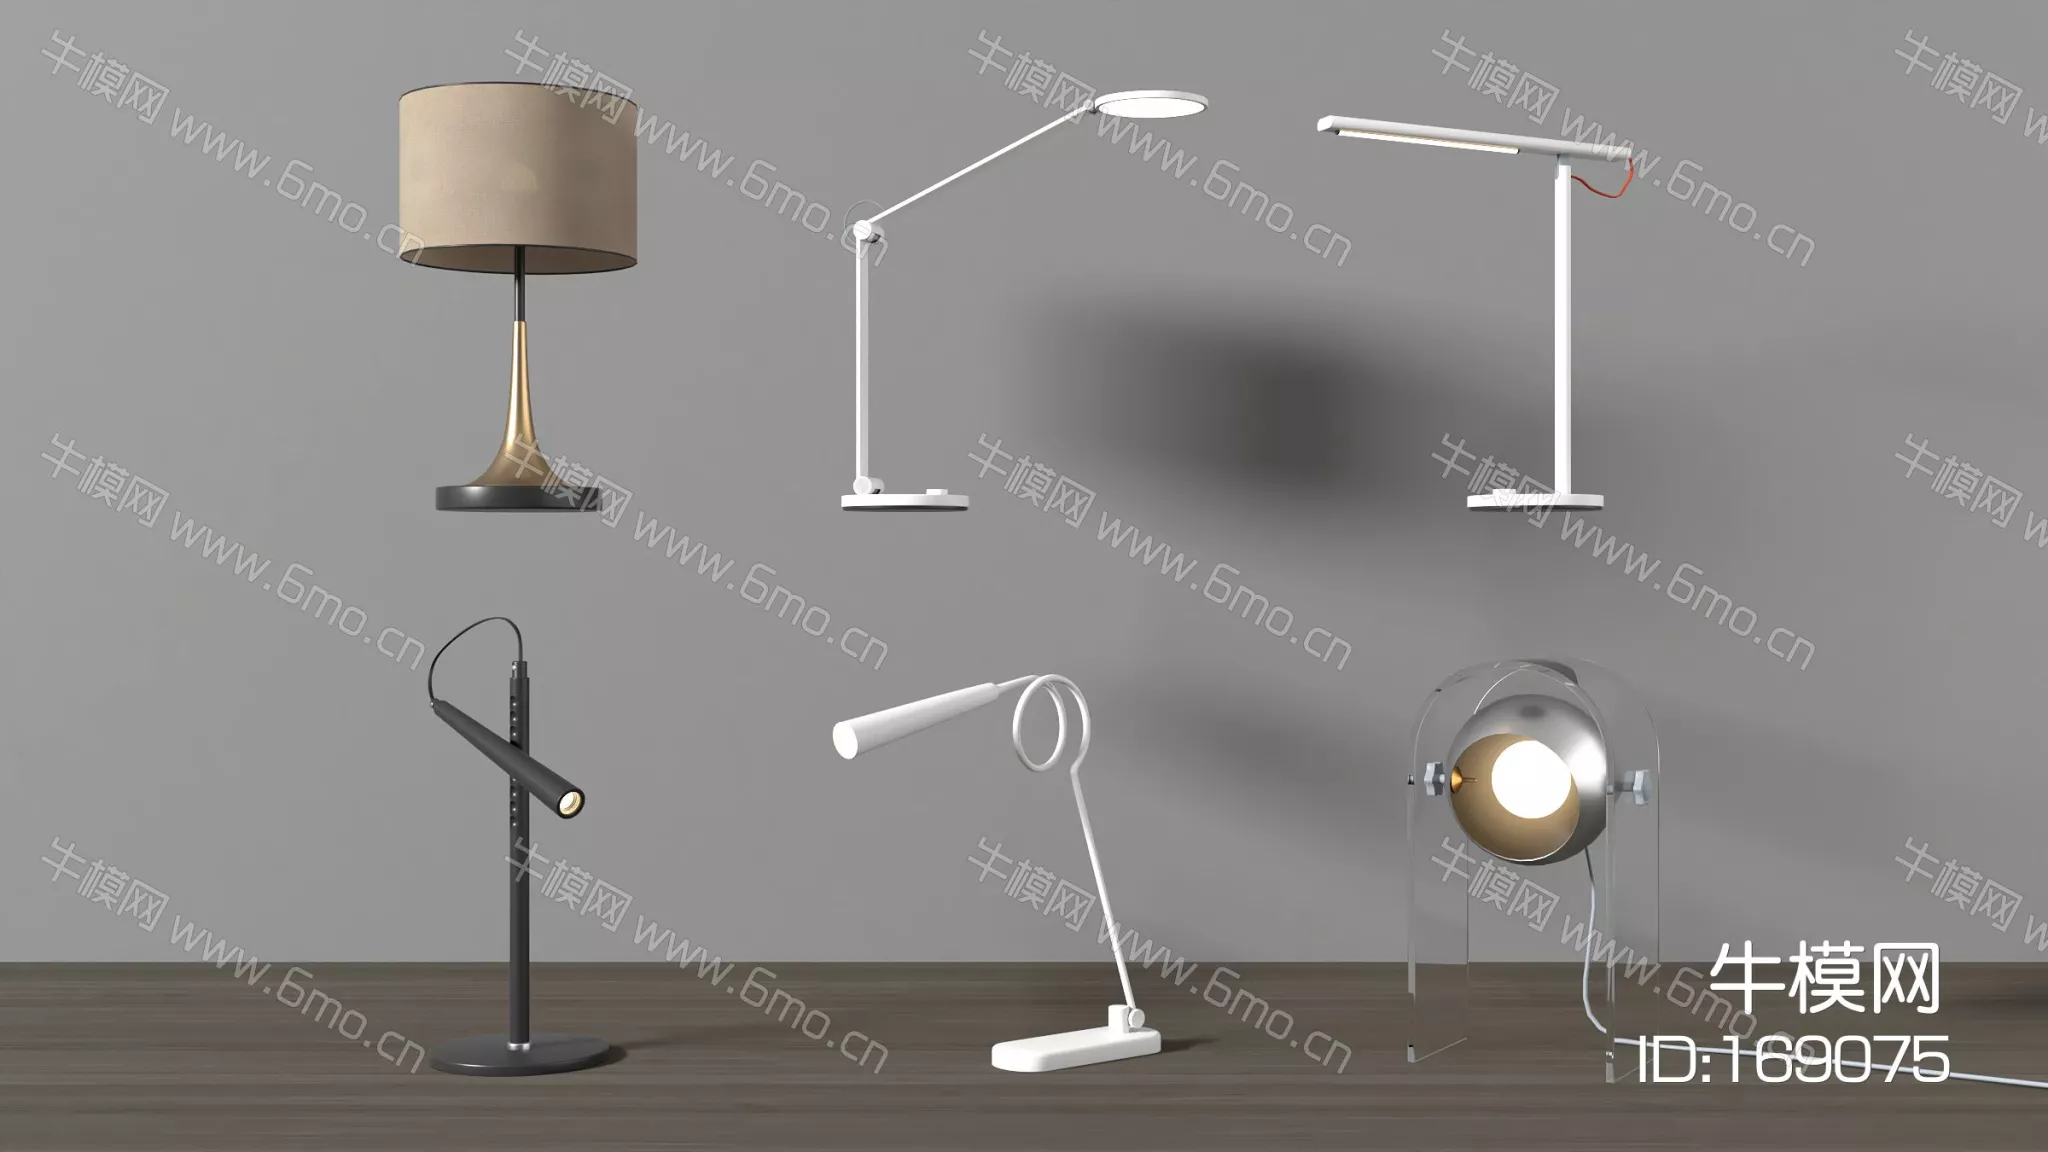 MODERN TABLE LAMP - SKETCHUP 3D MODEL - VRAY - 169075